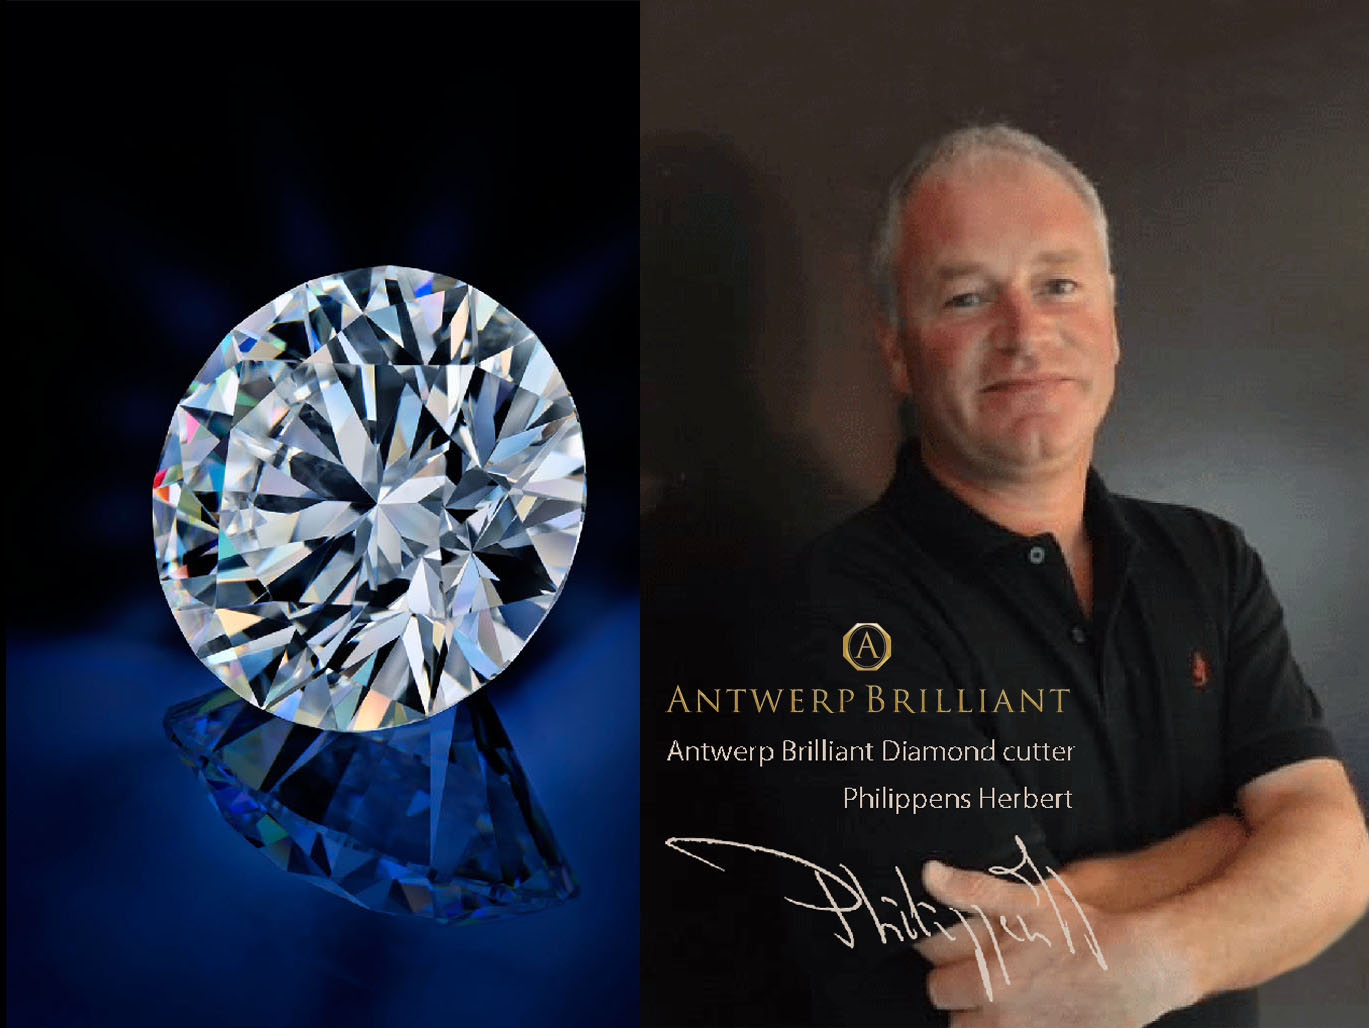 master diamond-cutter Phillippens Herbert is based in Antwerp and make heartï¼Cupid in 1993